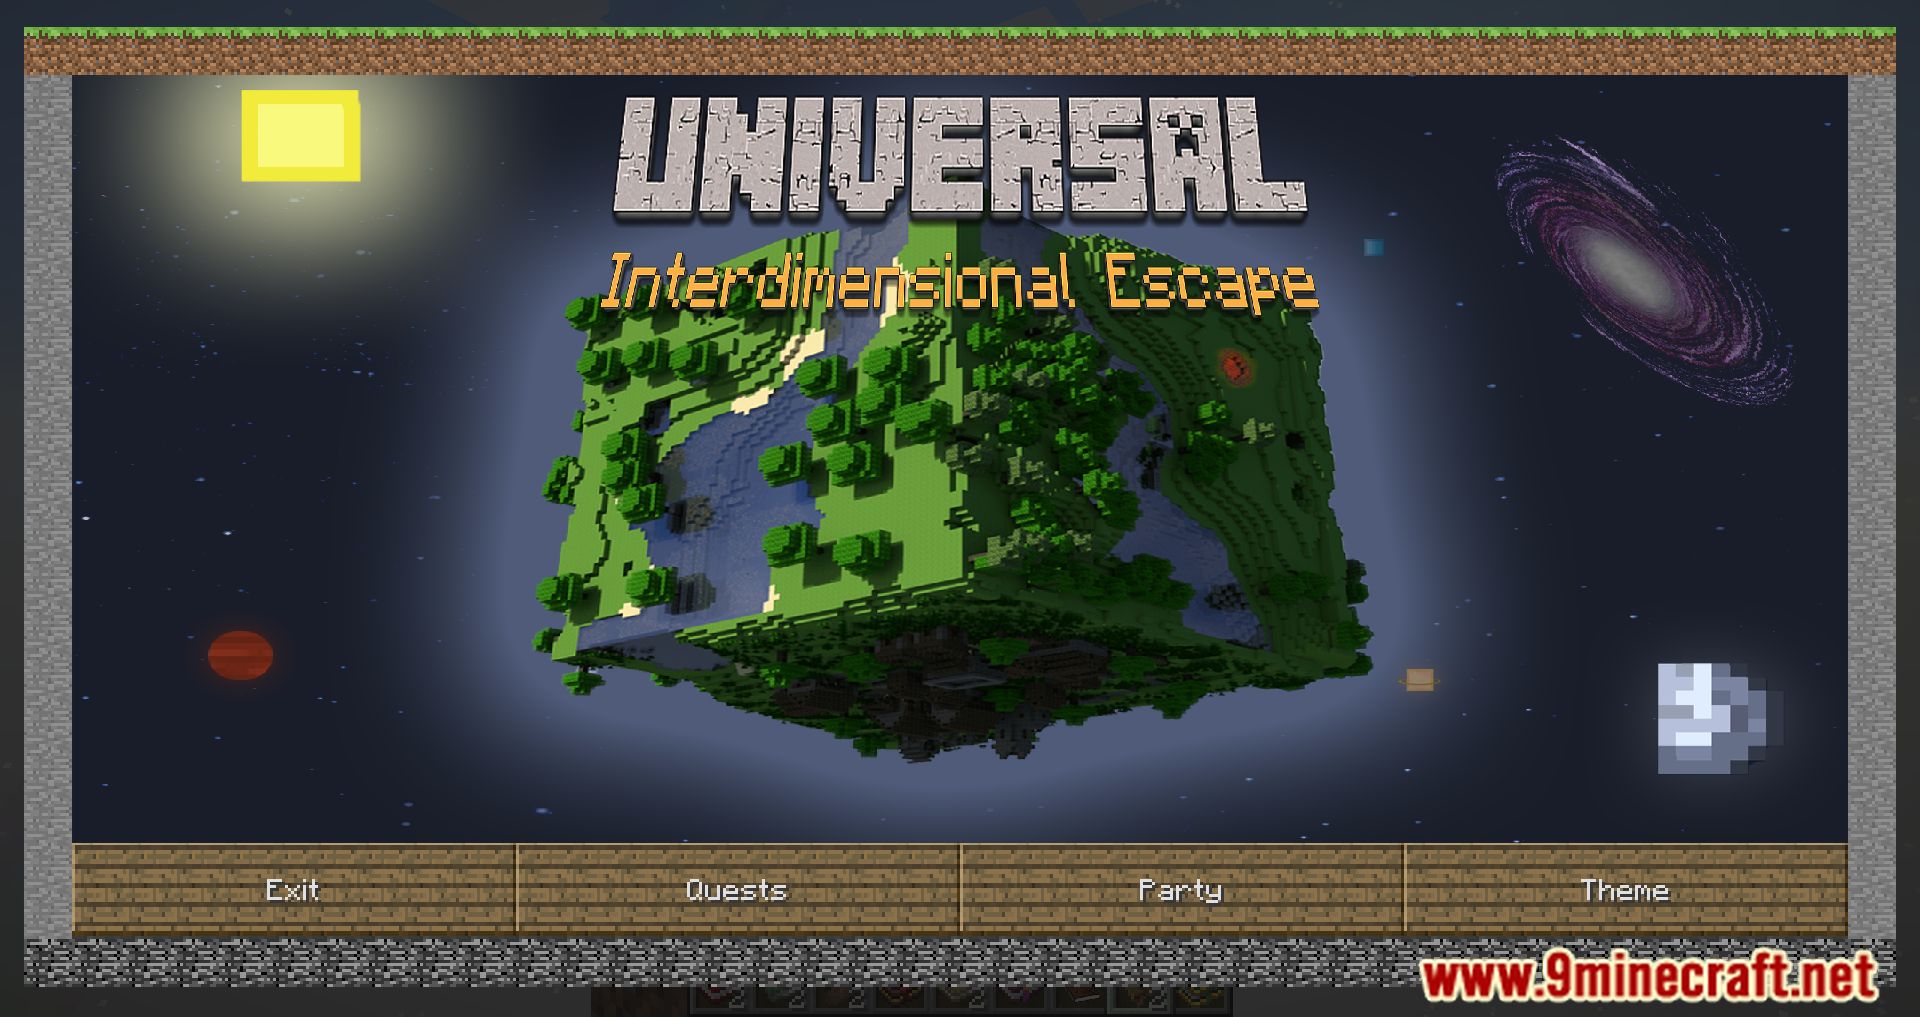 Universal Interdimensional Escape Modpack (1.7.10) - Survival, Exploration, And lots Of EMC! 8